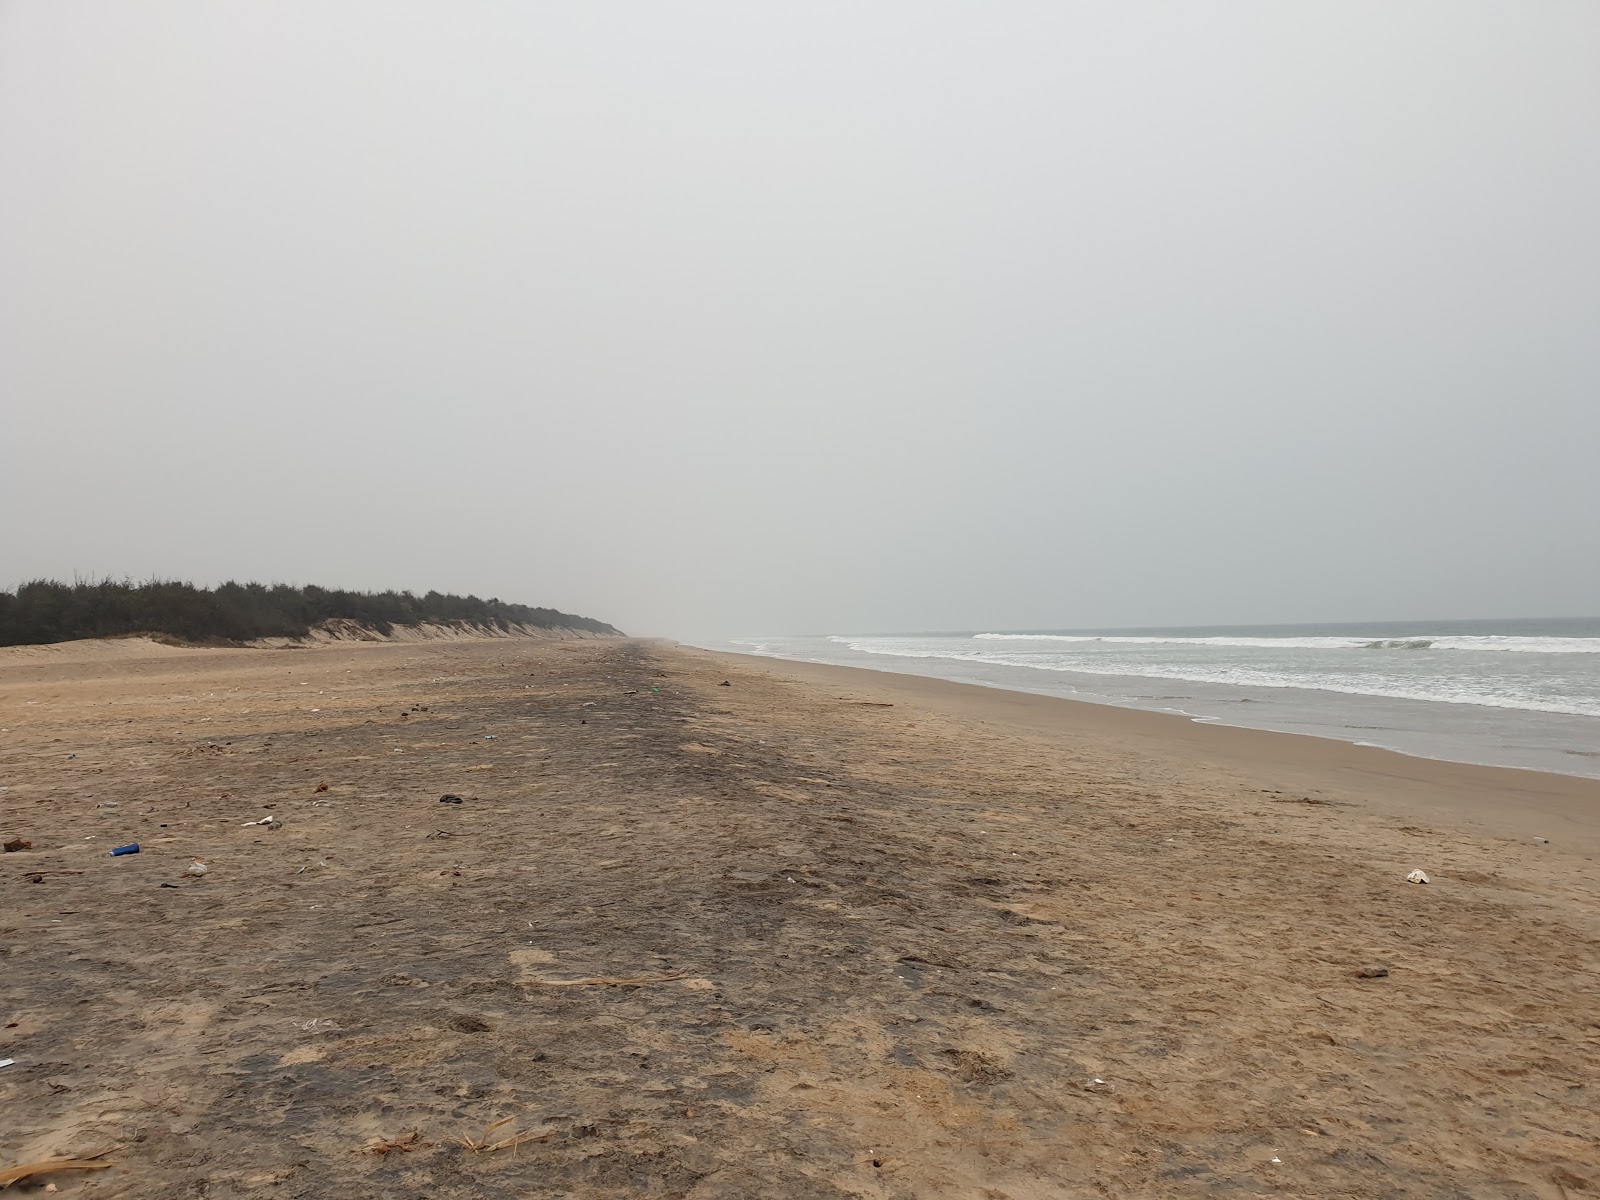 Foto di Kaviti Rangala Gadda Beach ubicato in zona naturale